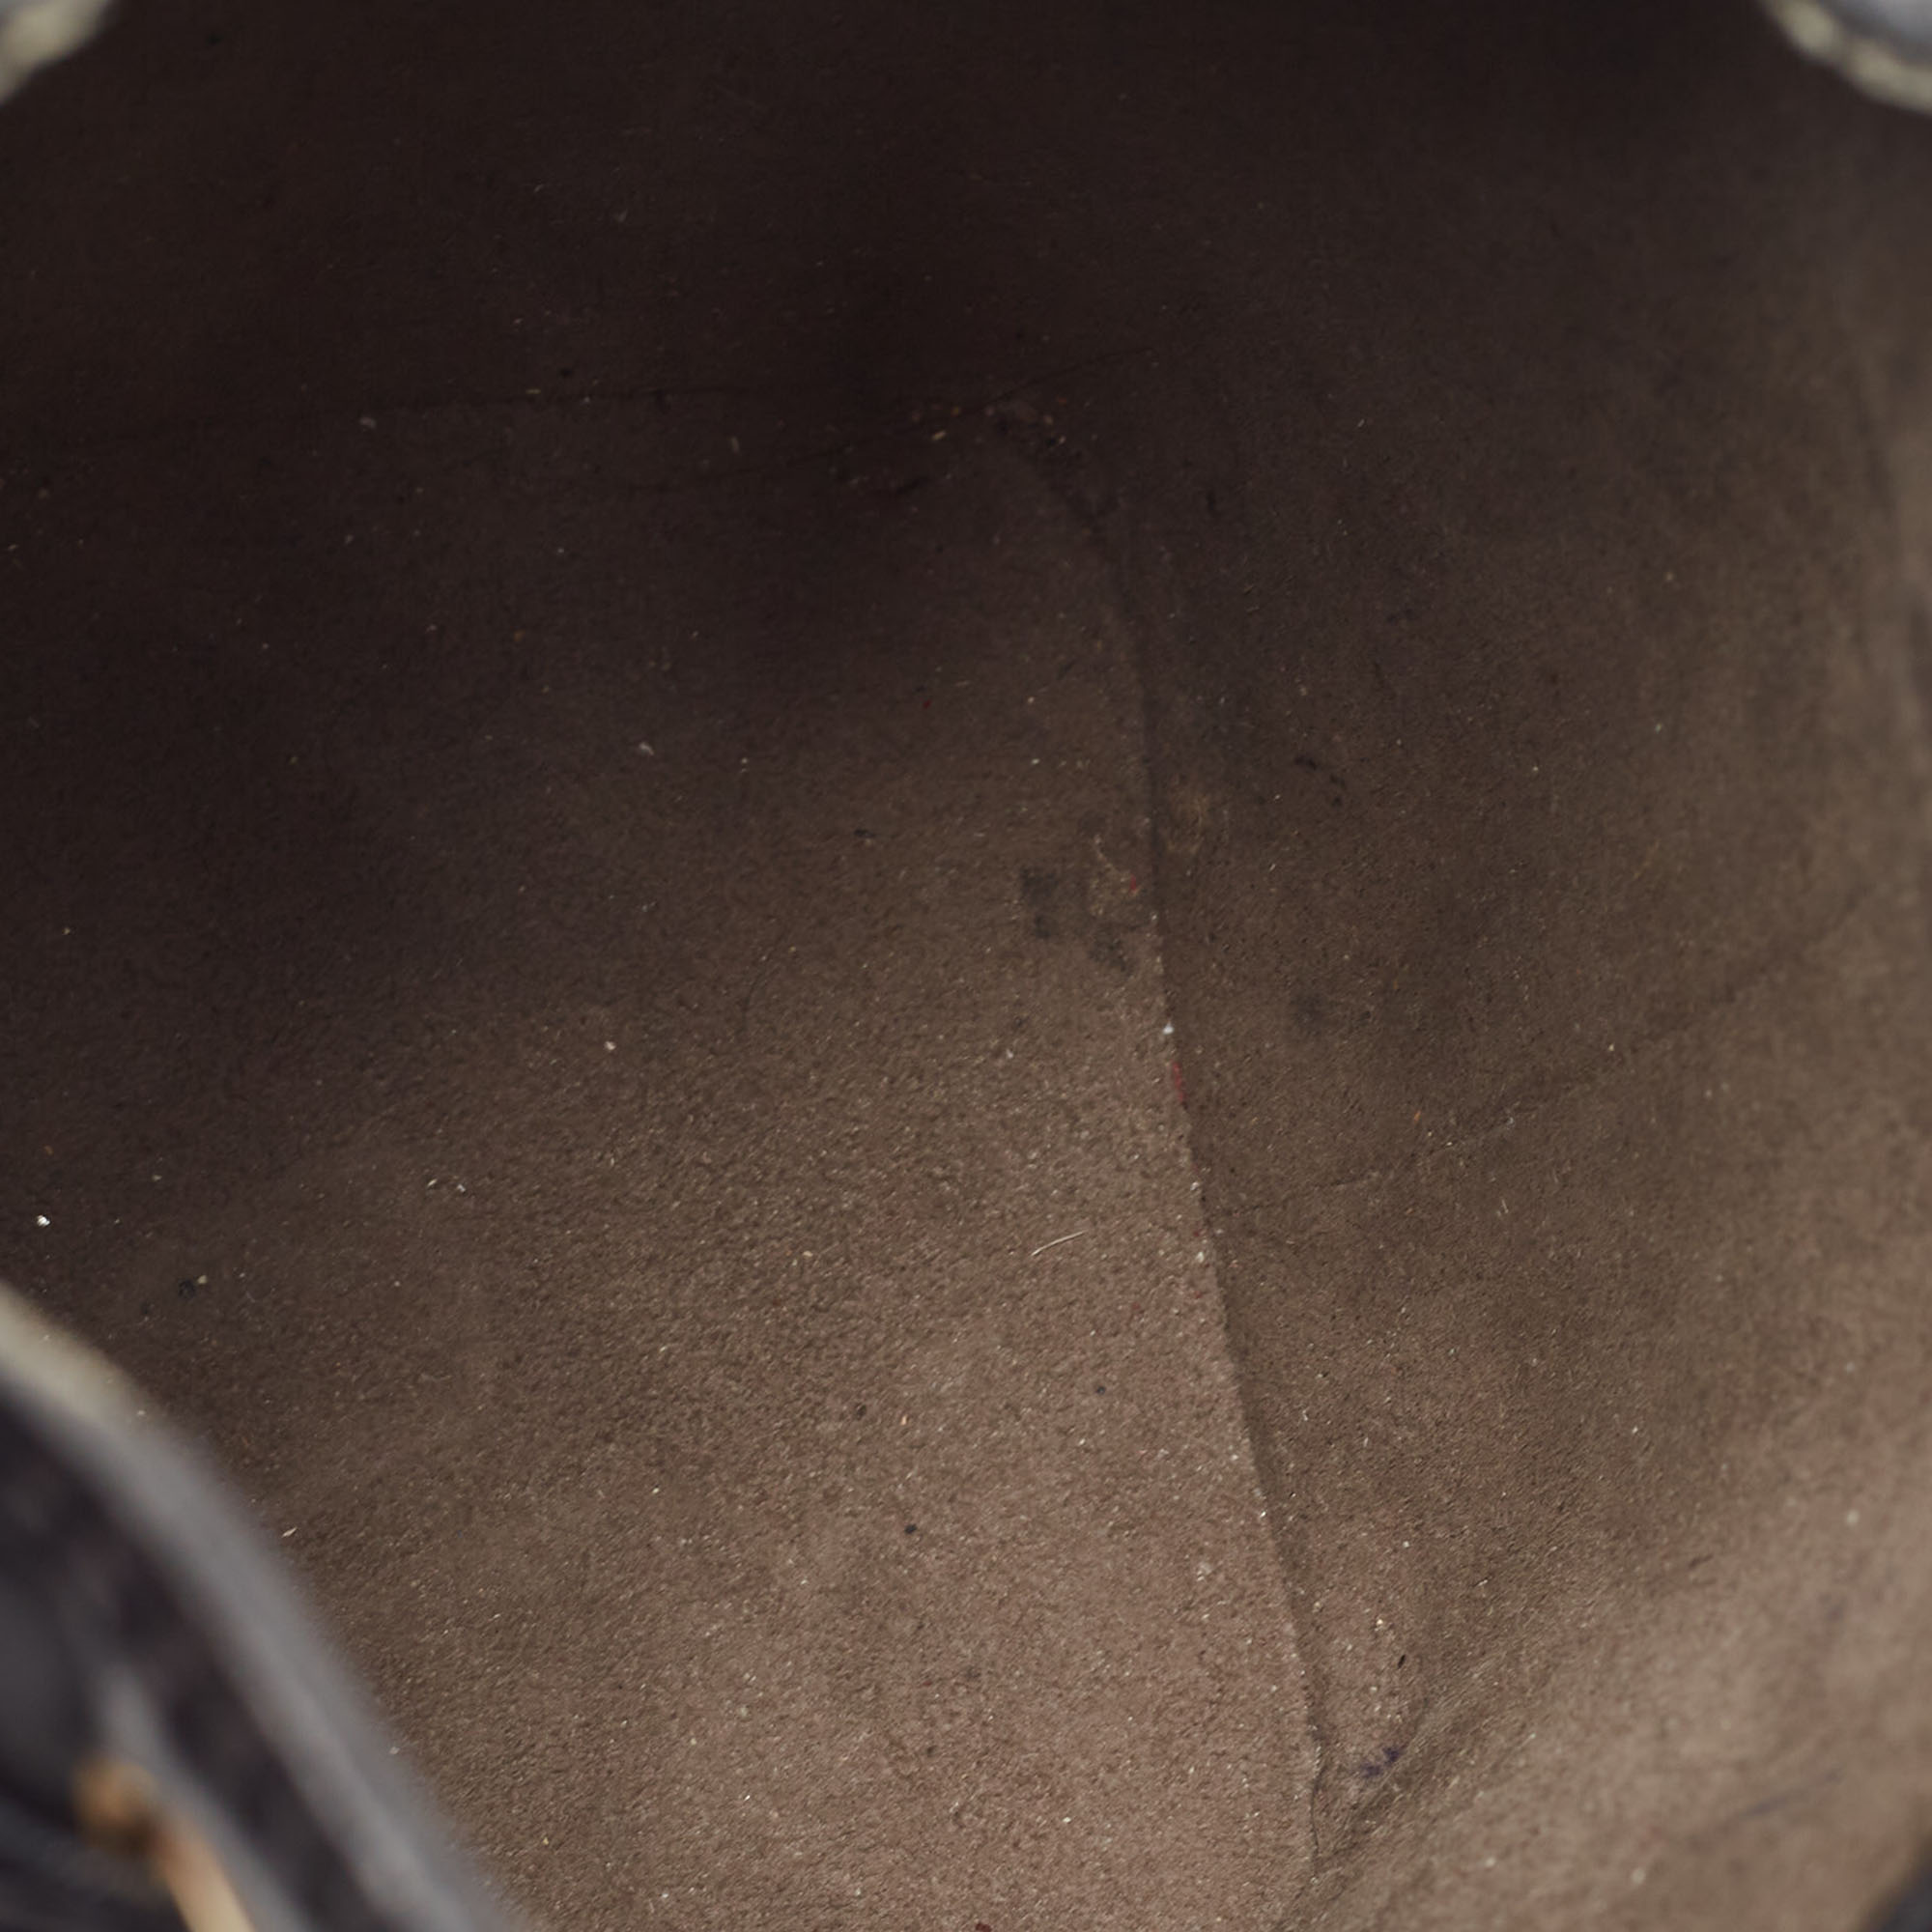 Fendi Black Leather Mini Mon Tresor Drawstring Bucket Bag